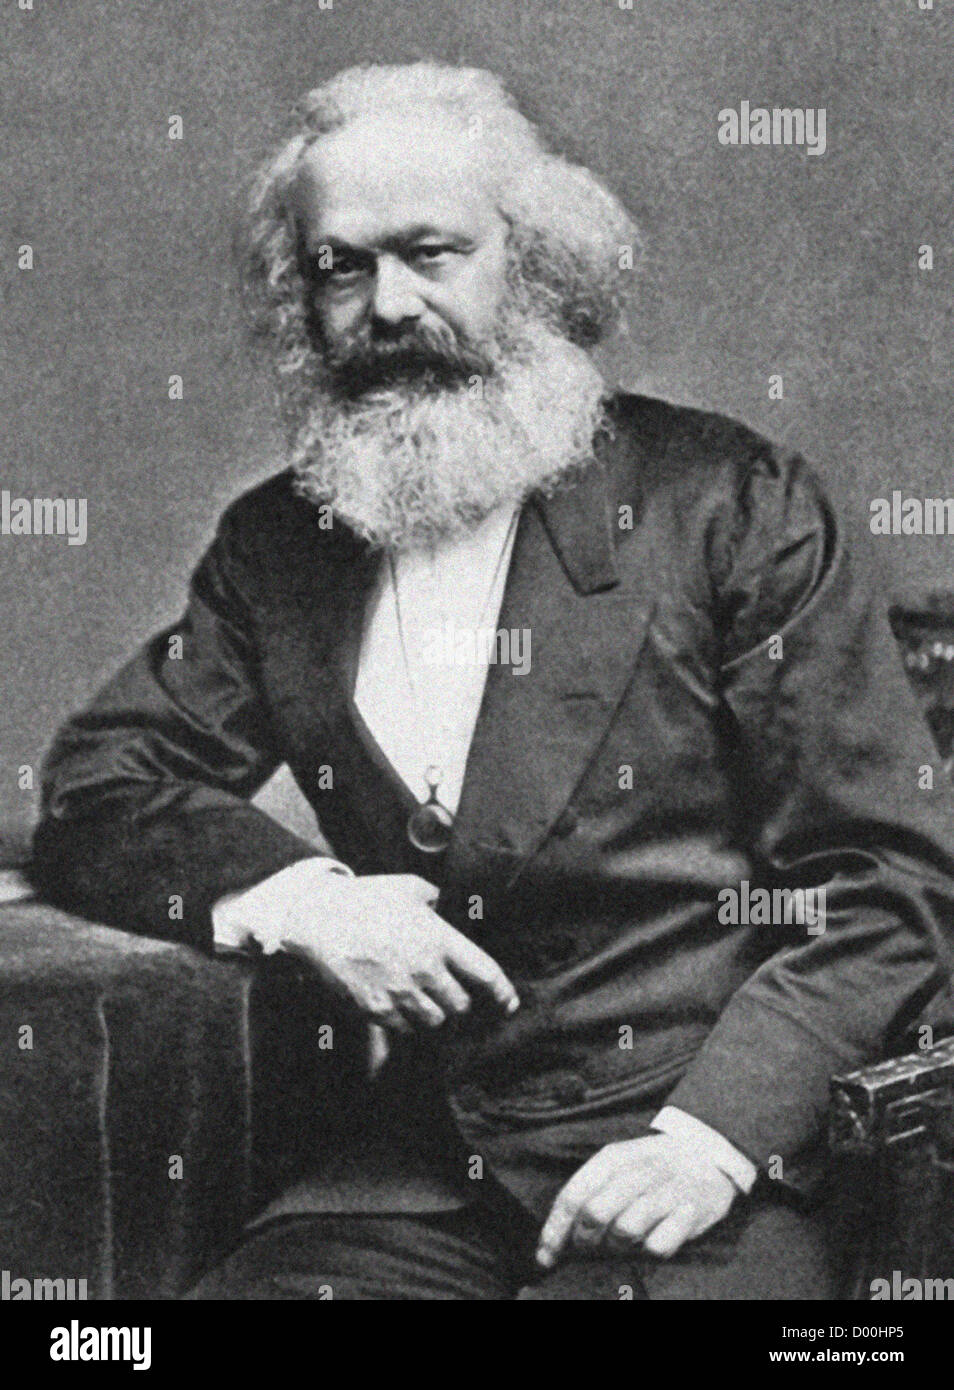 Karl Heinrich Marx was a German philosopher, economist, sociologist, historian, journalist, and revolutionary socialist. From the archives of Press Portrait Service, formerly Press Portrait Bureau. Stock Photo